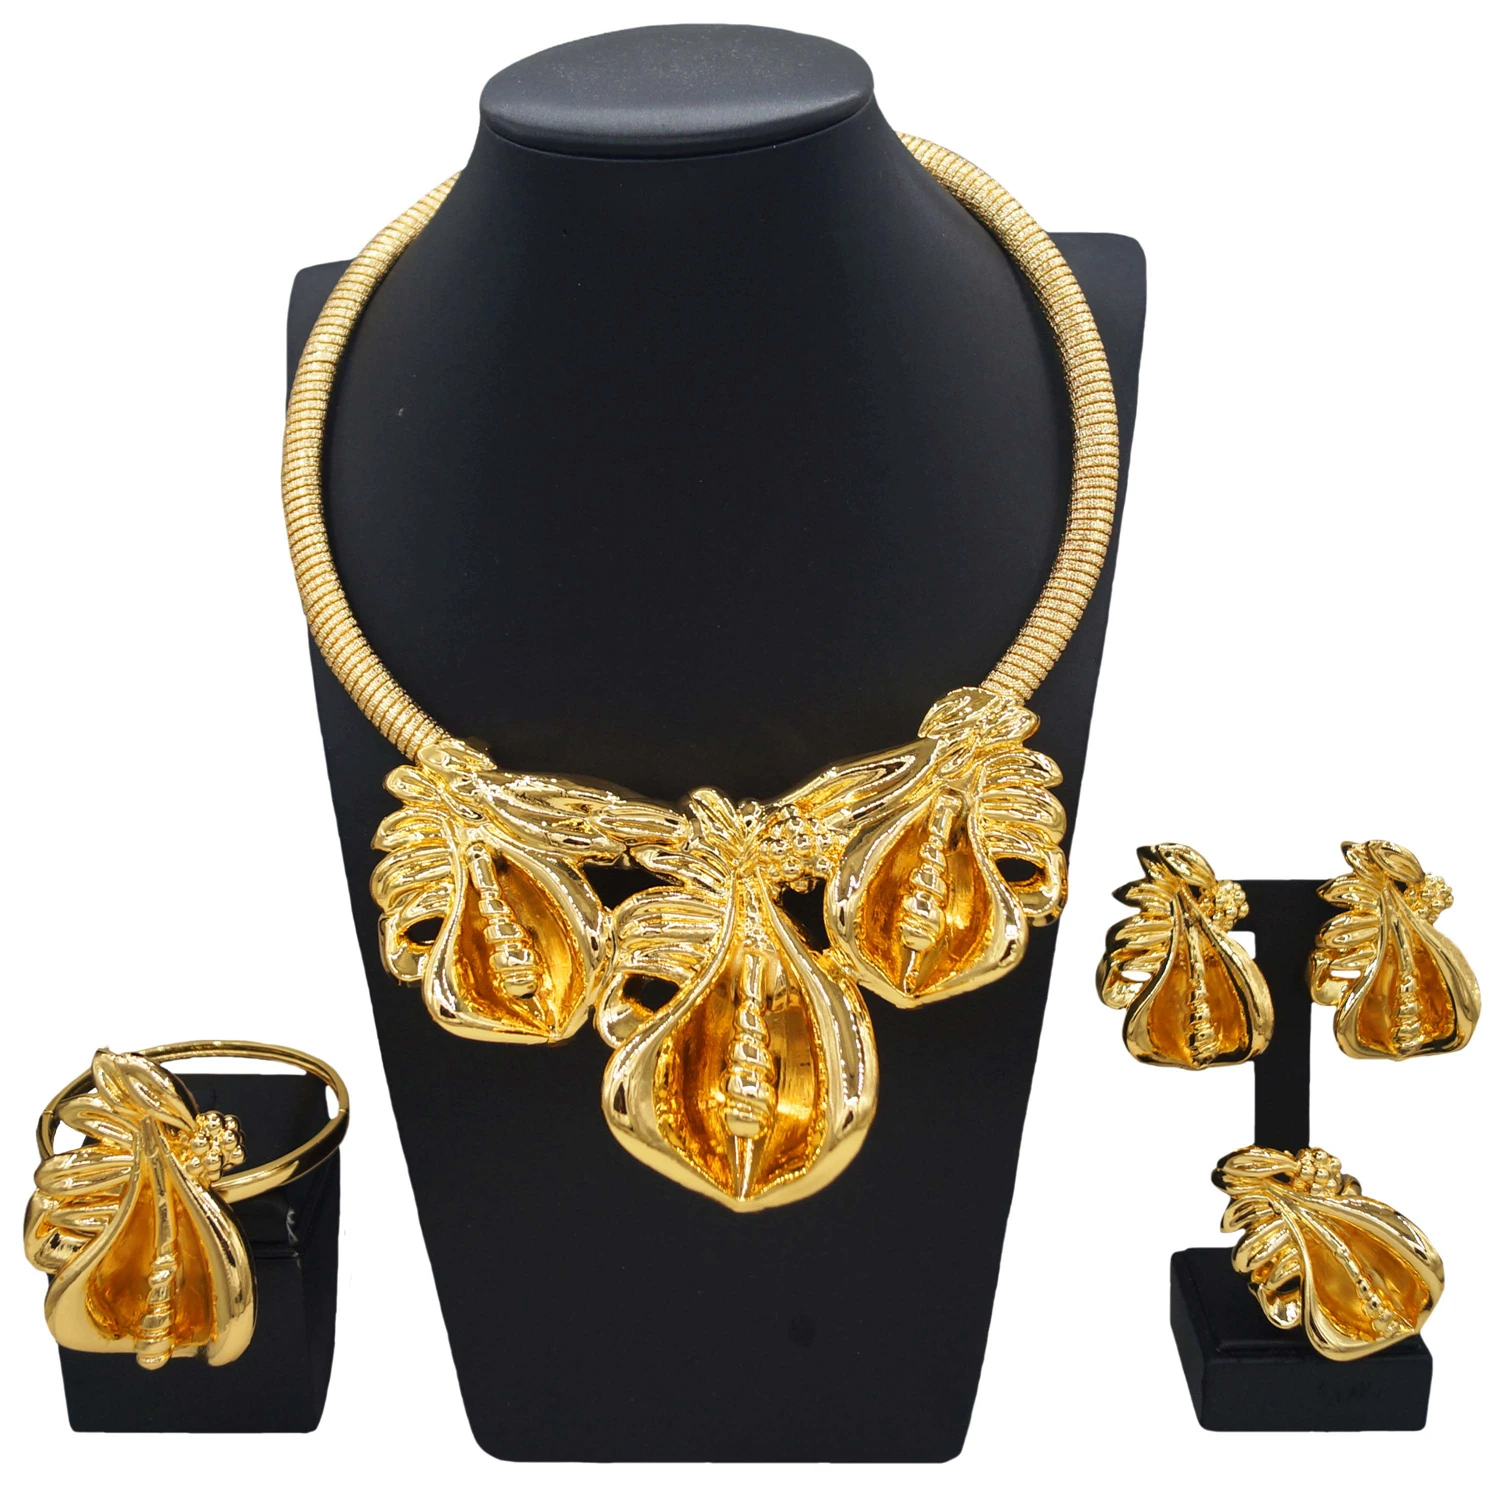 

Yulaili Fashion Brass Hollow Jewelry Set Italian Nigerian Wedding Luxury exquisite four-piece women's party necklace earrings